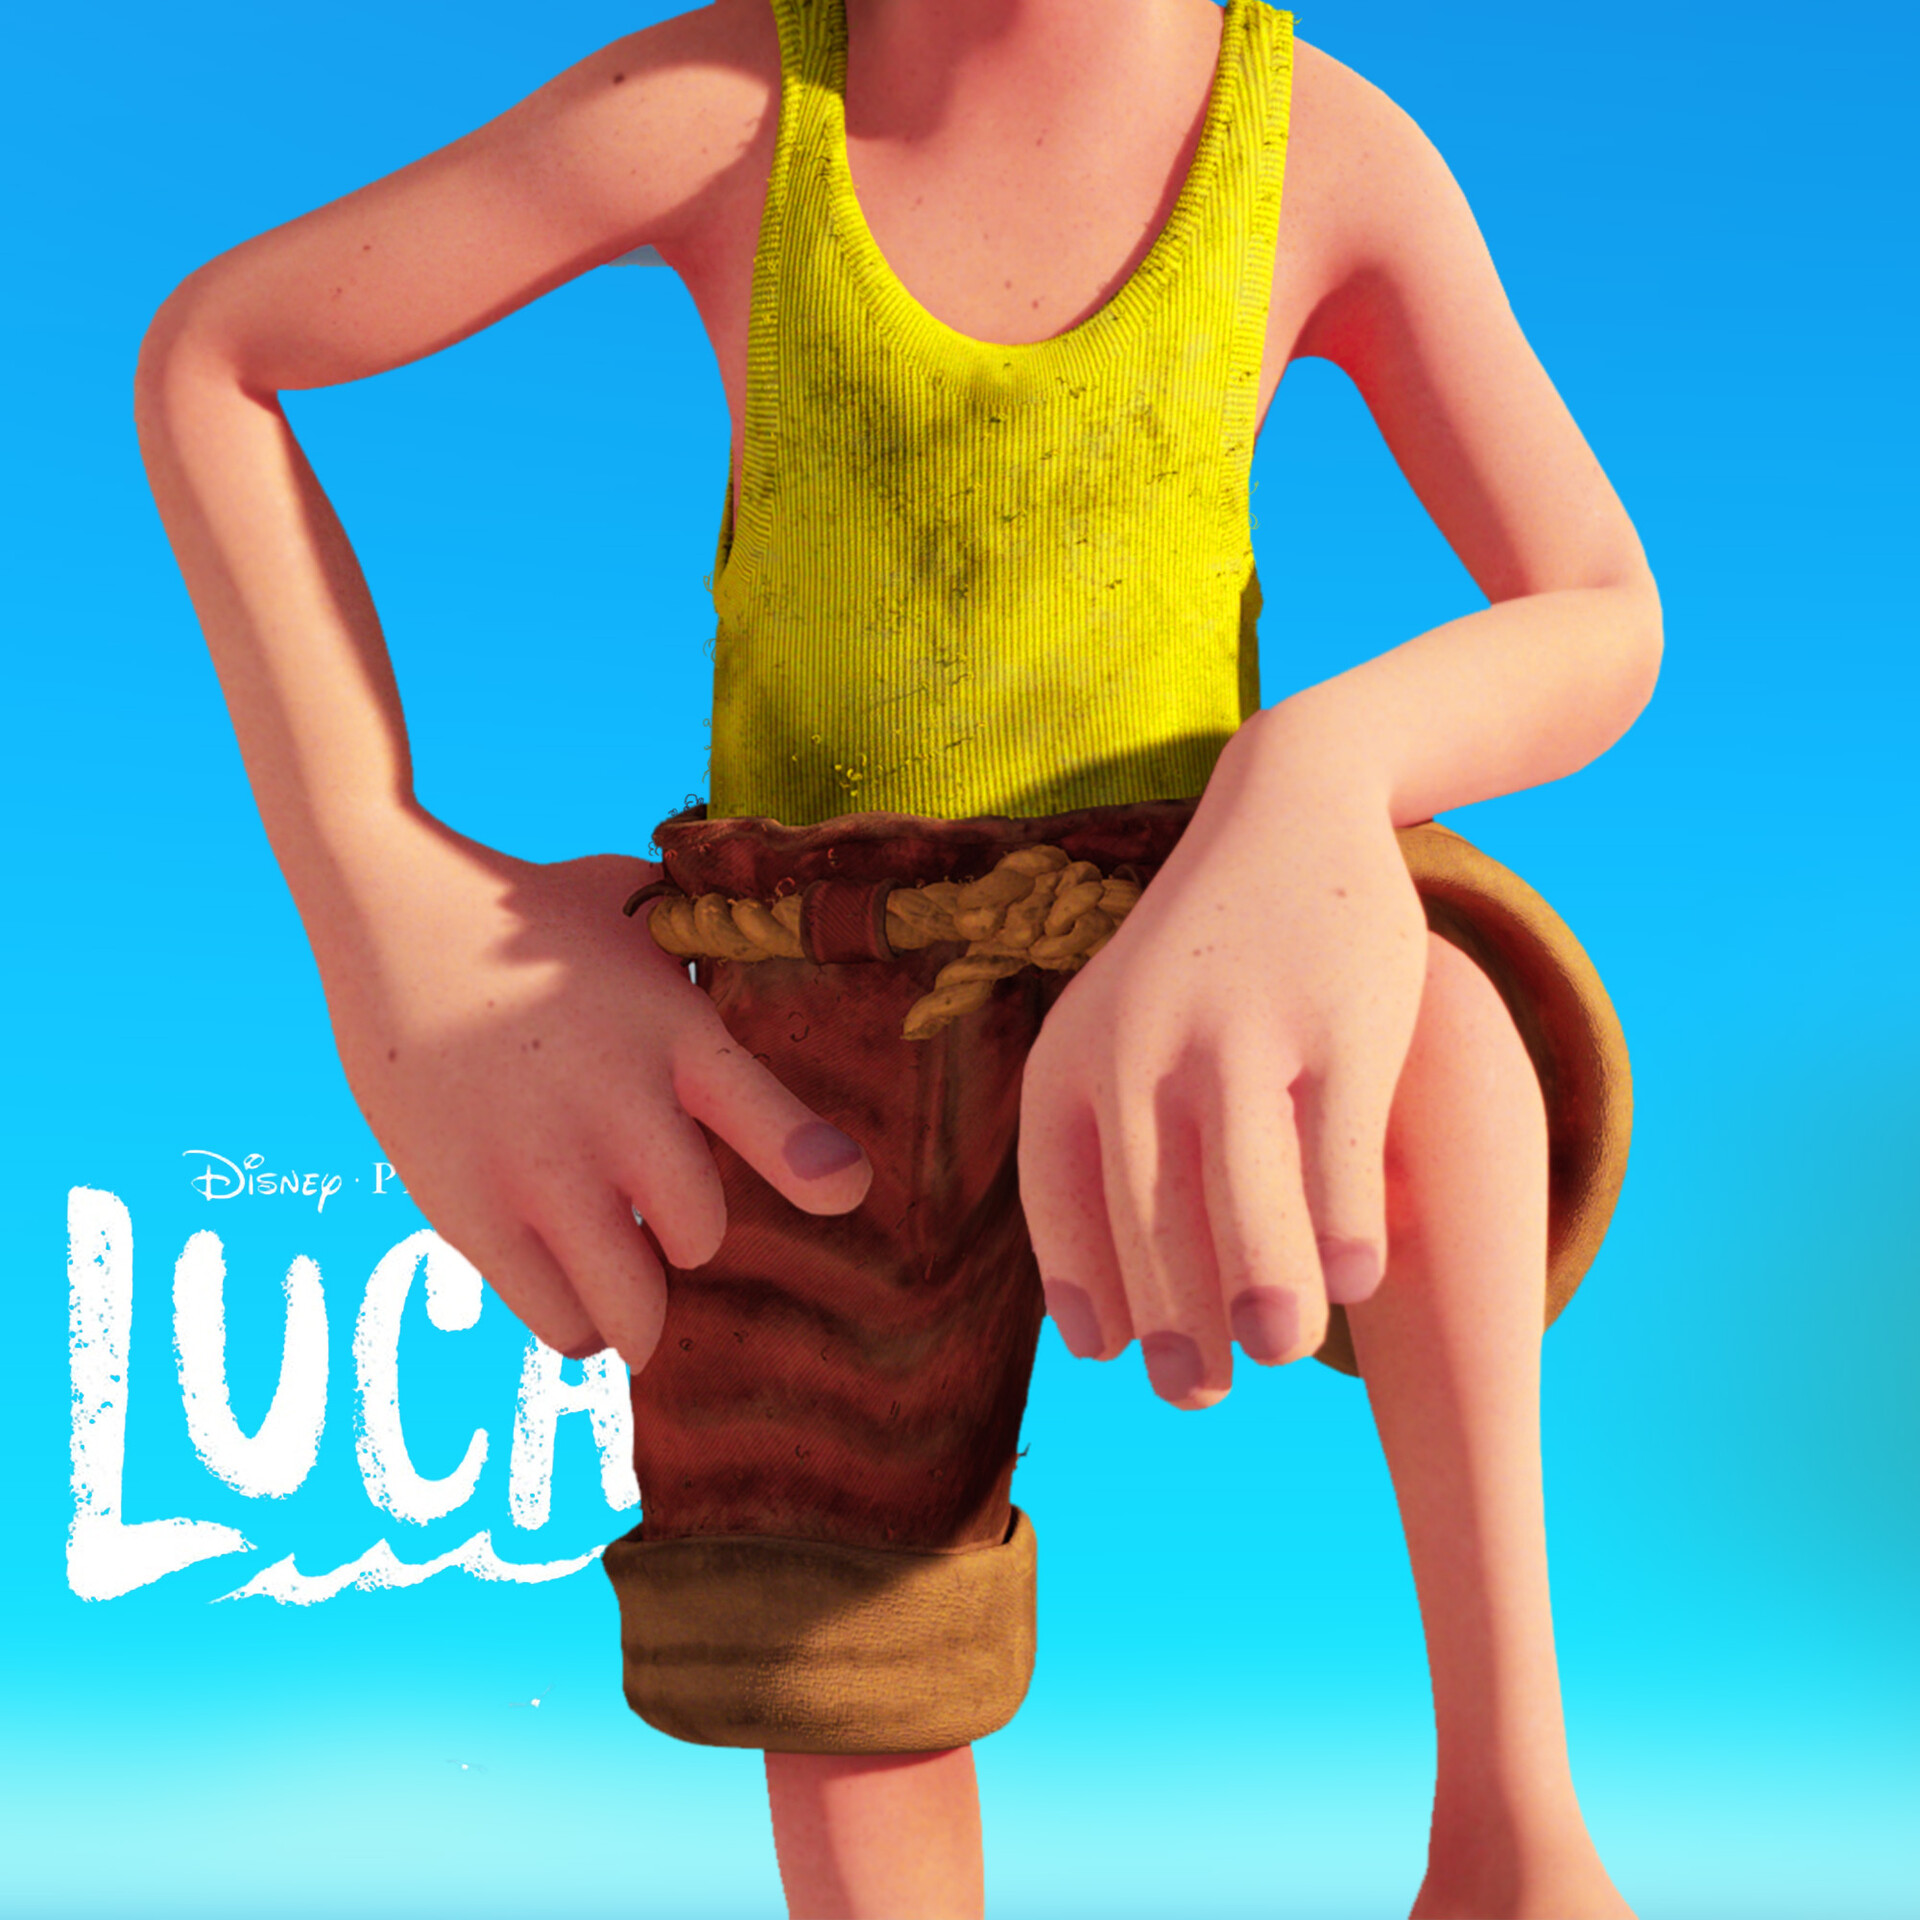 ArtStation - Luca Paguro (Pixar Luca) Fanart